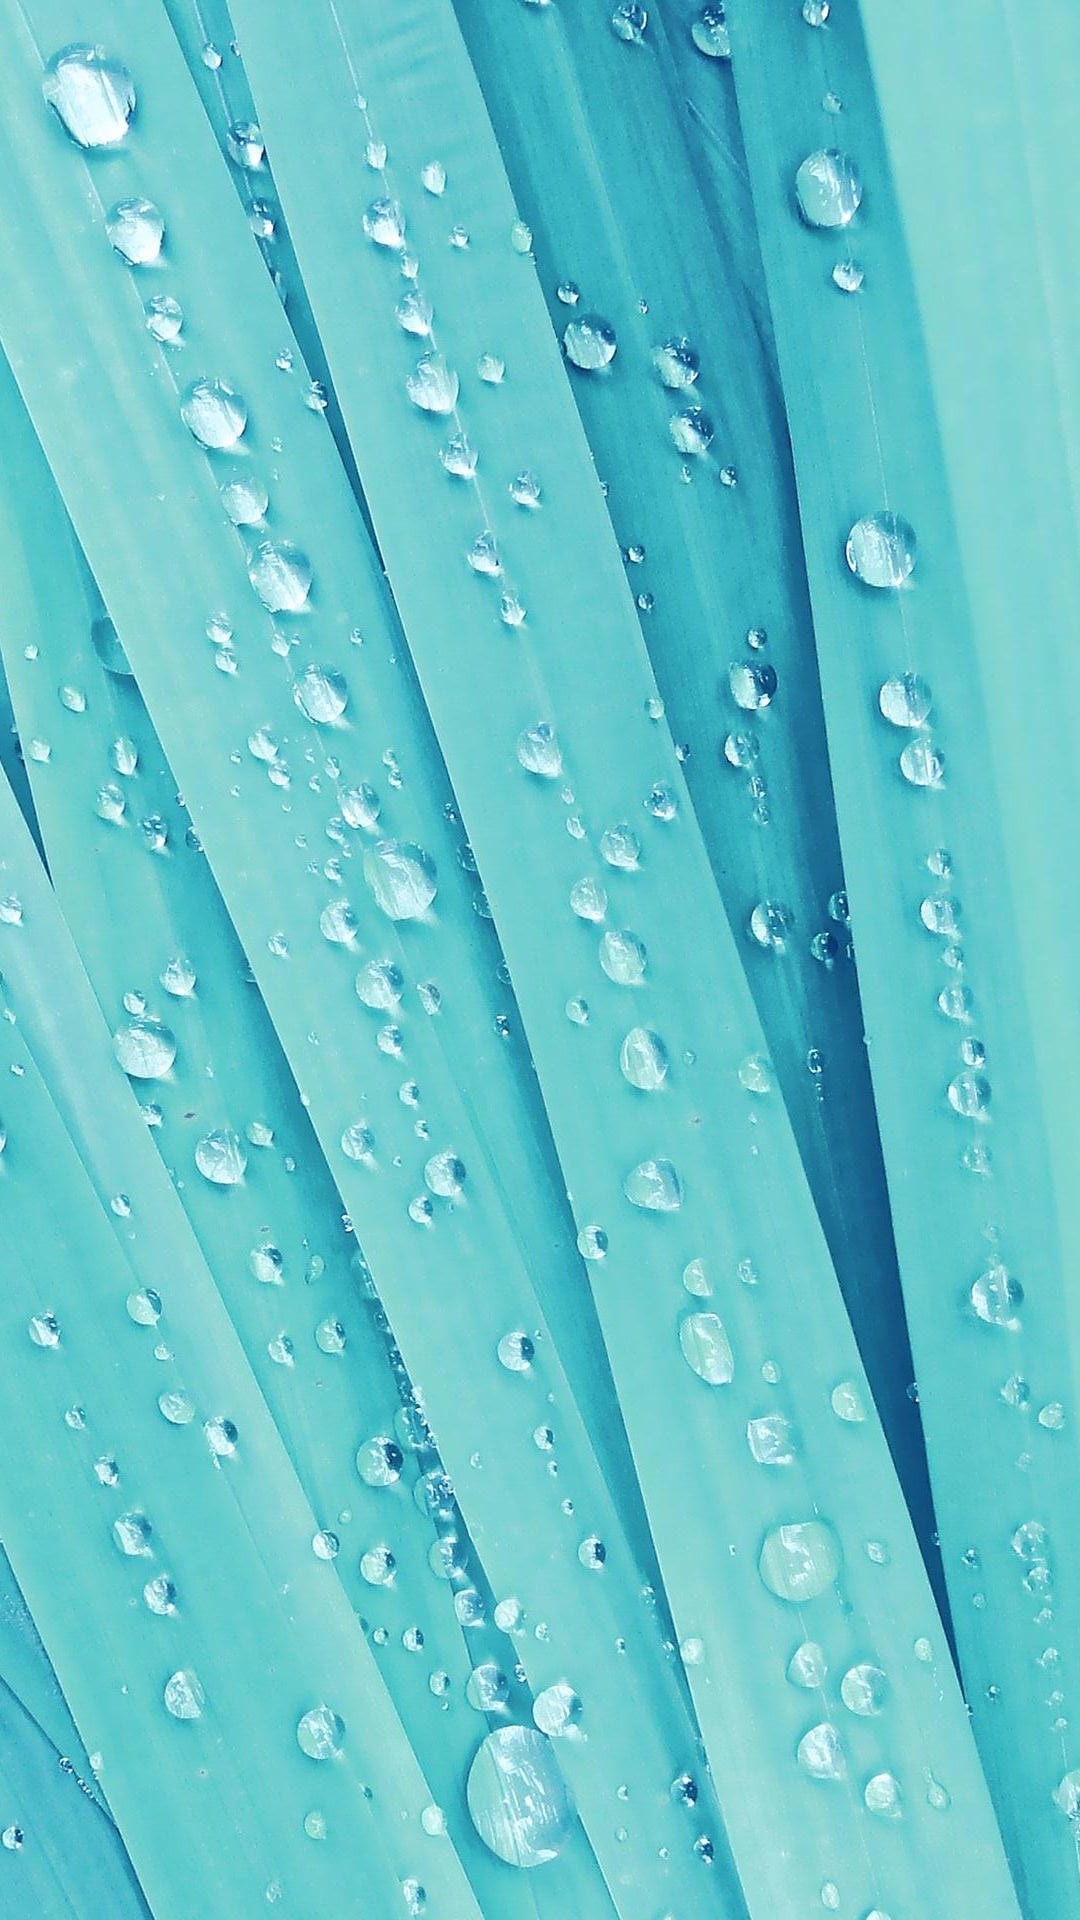 Water Drops Htc HD Wallpaper Data Src Cool Htc Wallpaper Blue Wallpaper For Android HD Wallpaper